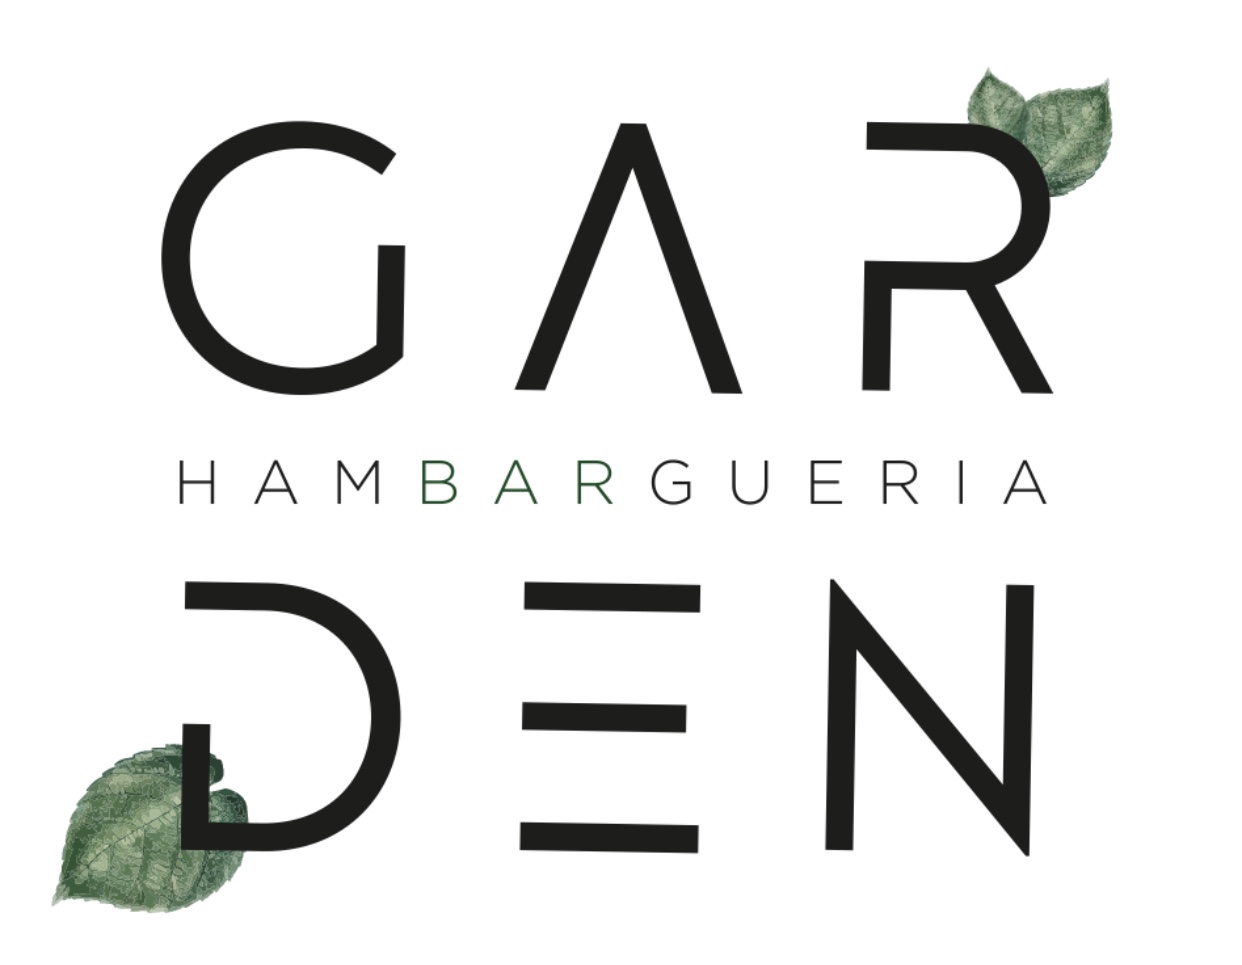 Garden HamBargueria